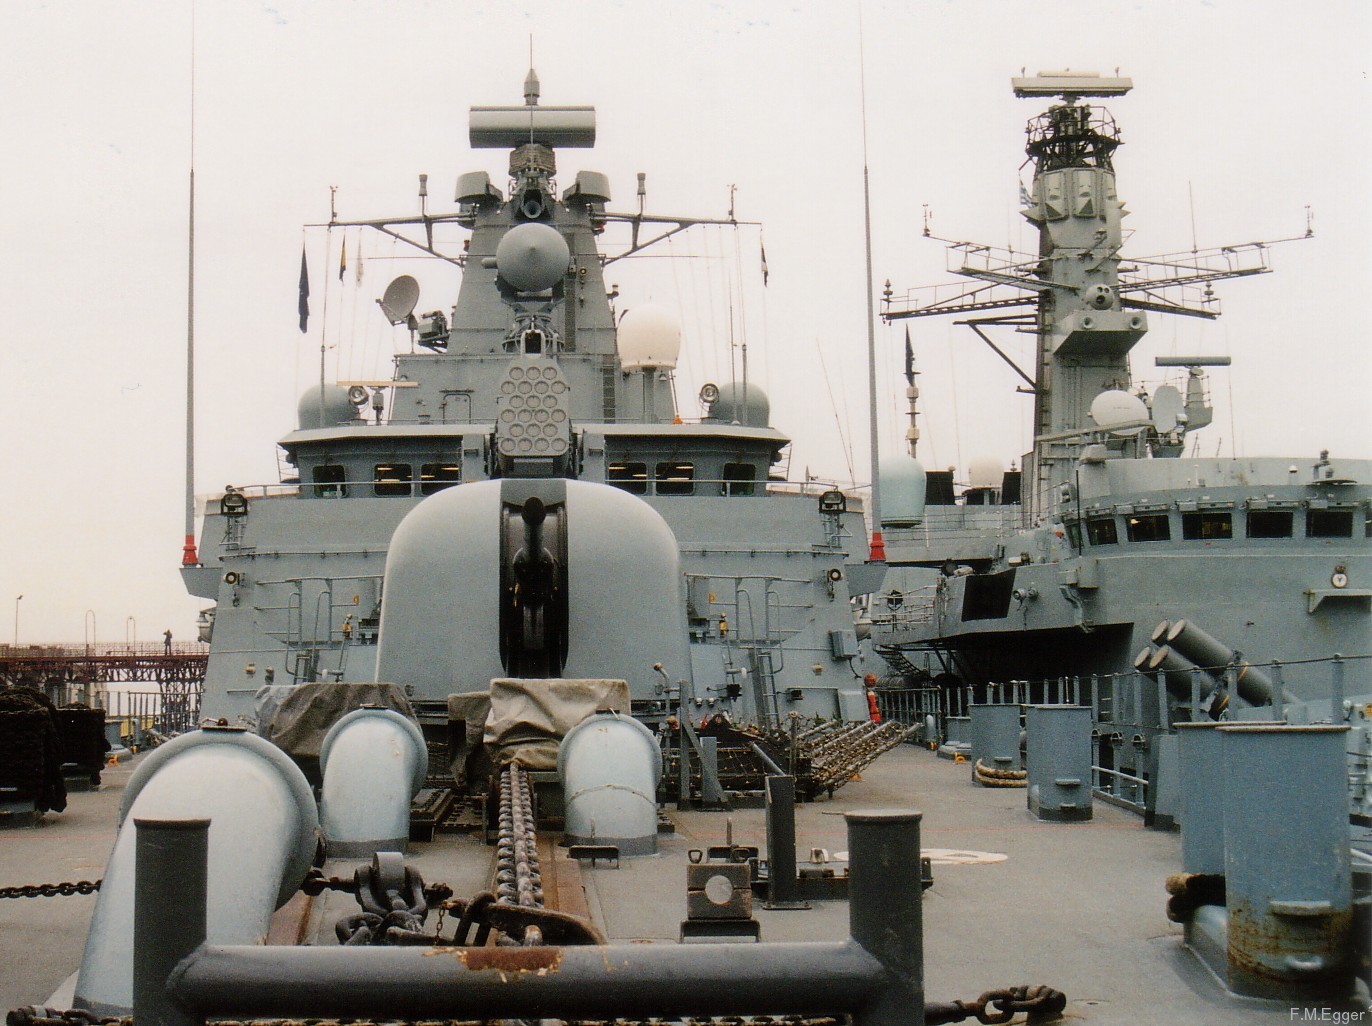 f-216 fgs schleswig holstein type 123 class frigate german navy nato stanavformed snfm trieste italy 2003 28